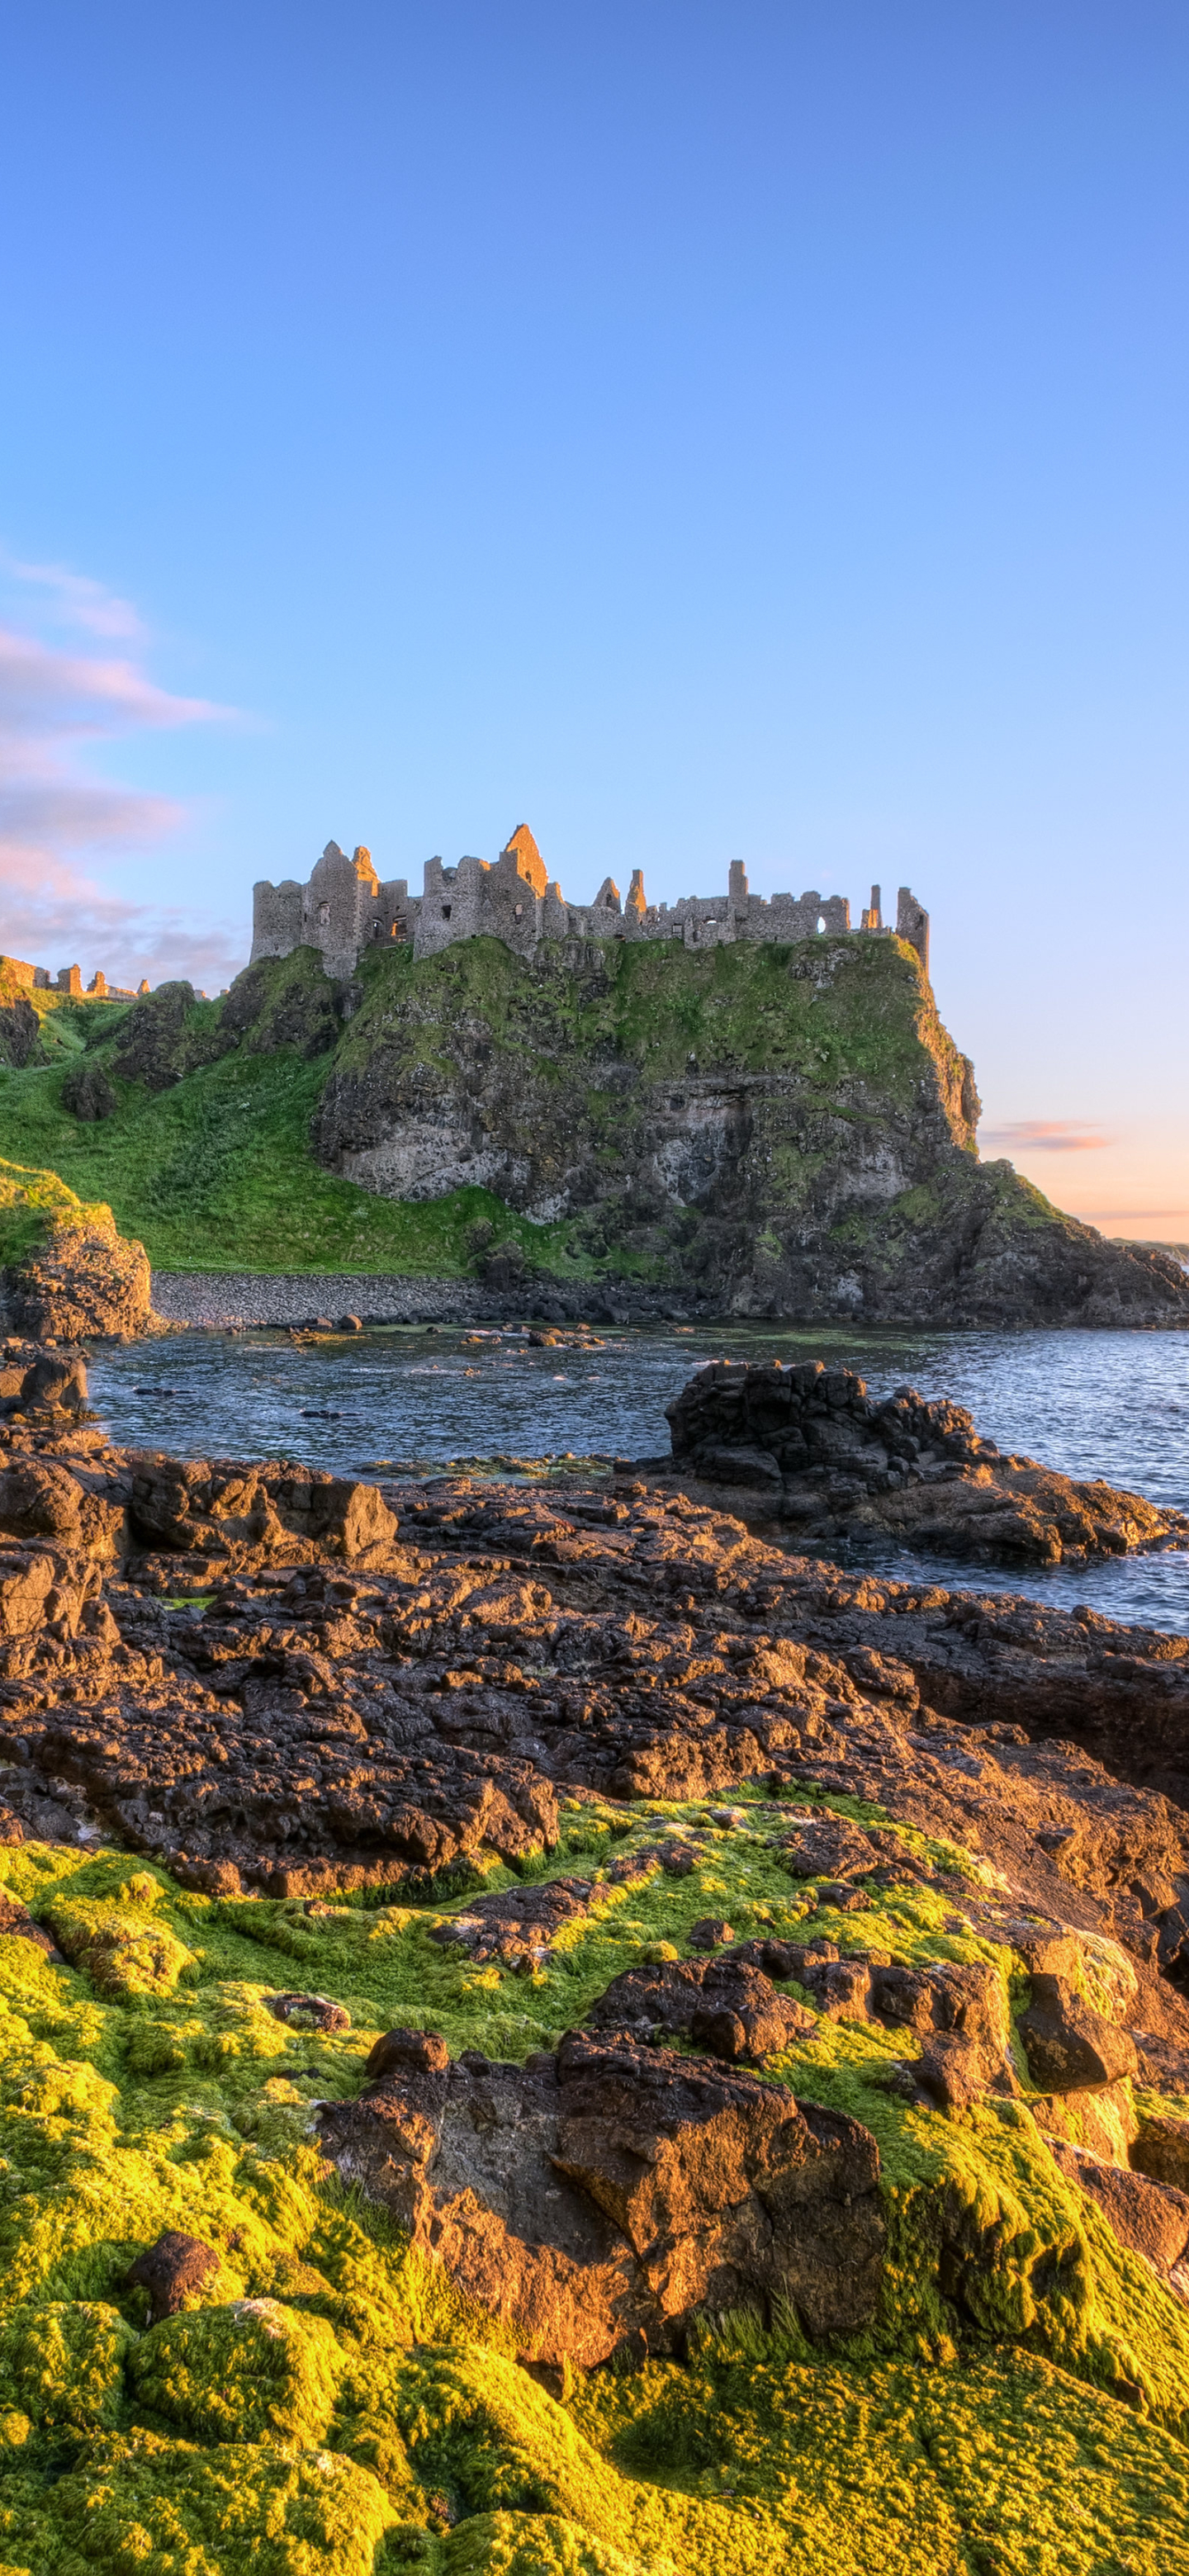 Dunluce Medieval Castle on the Coast of Ireland